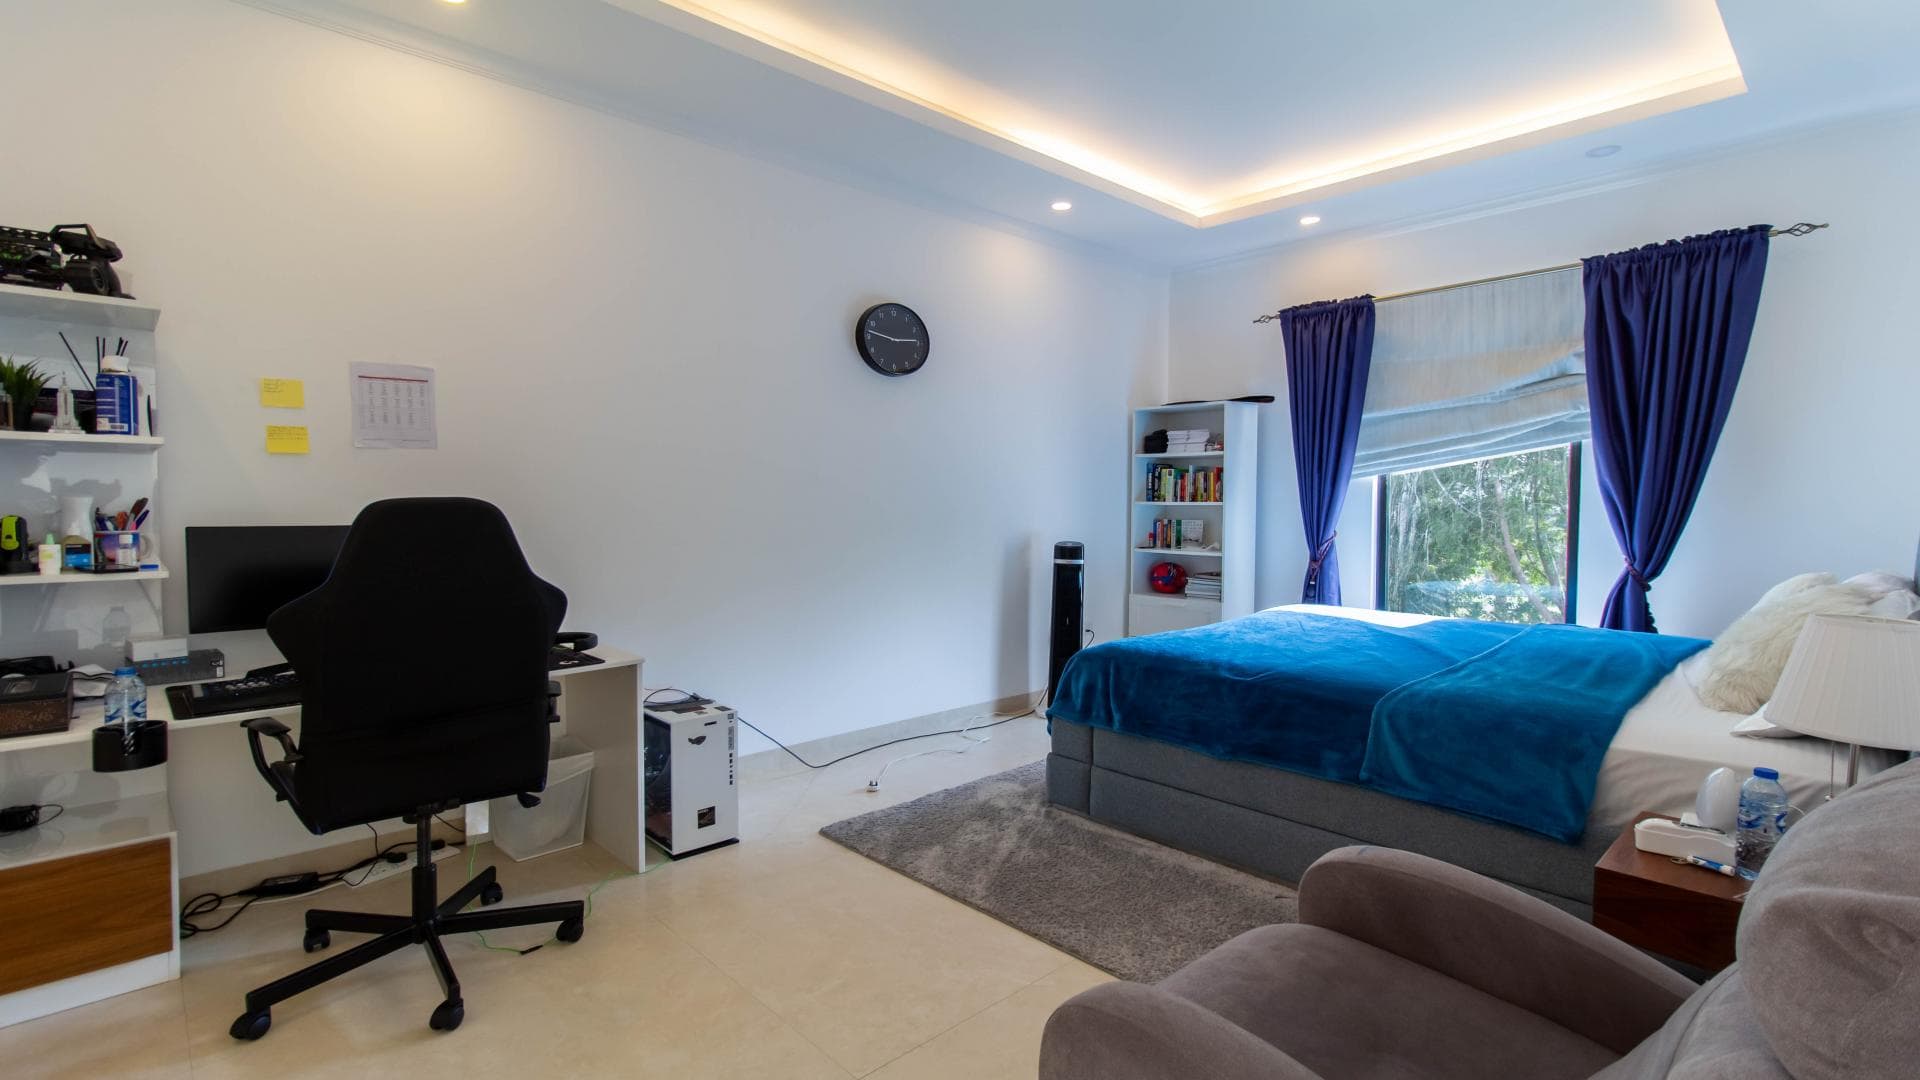 4 Bedroom Villa For Rent Apartment Building 6 Lp37952 Eb32eee5b40ac00.jpg